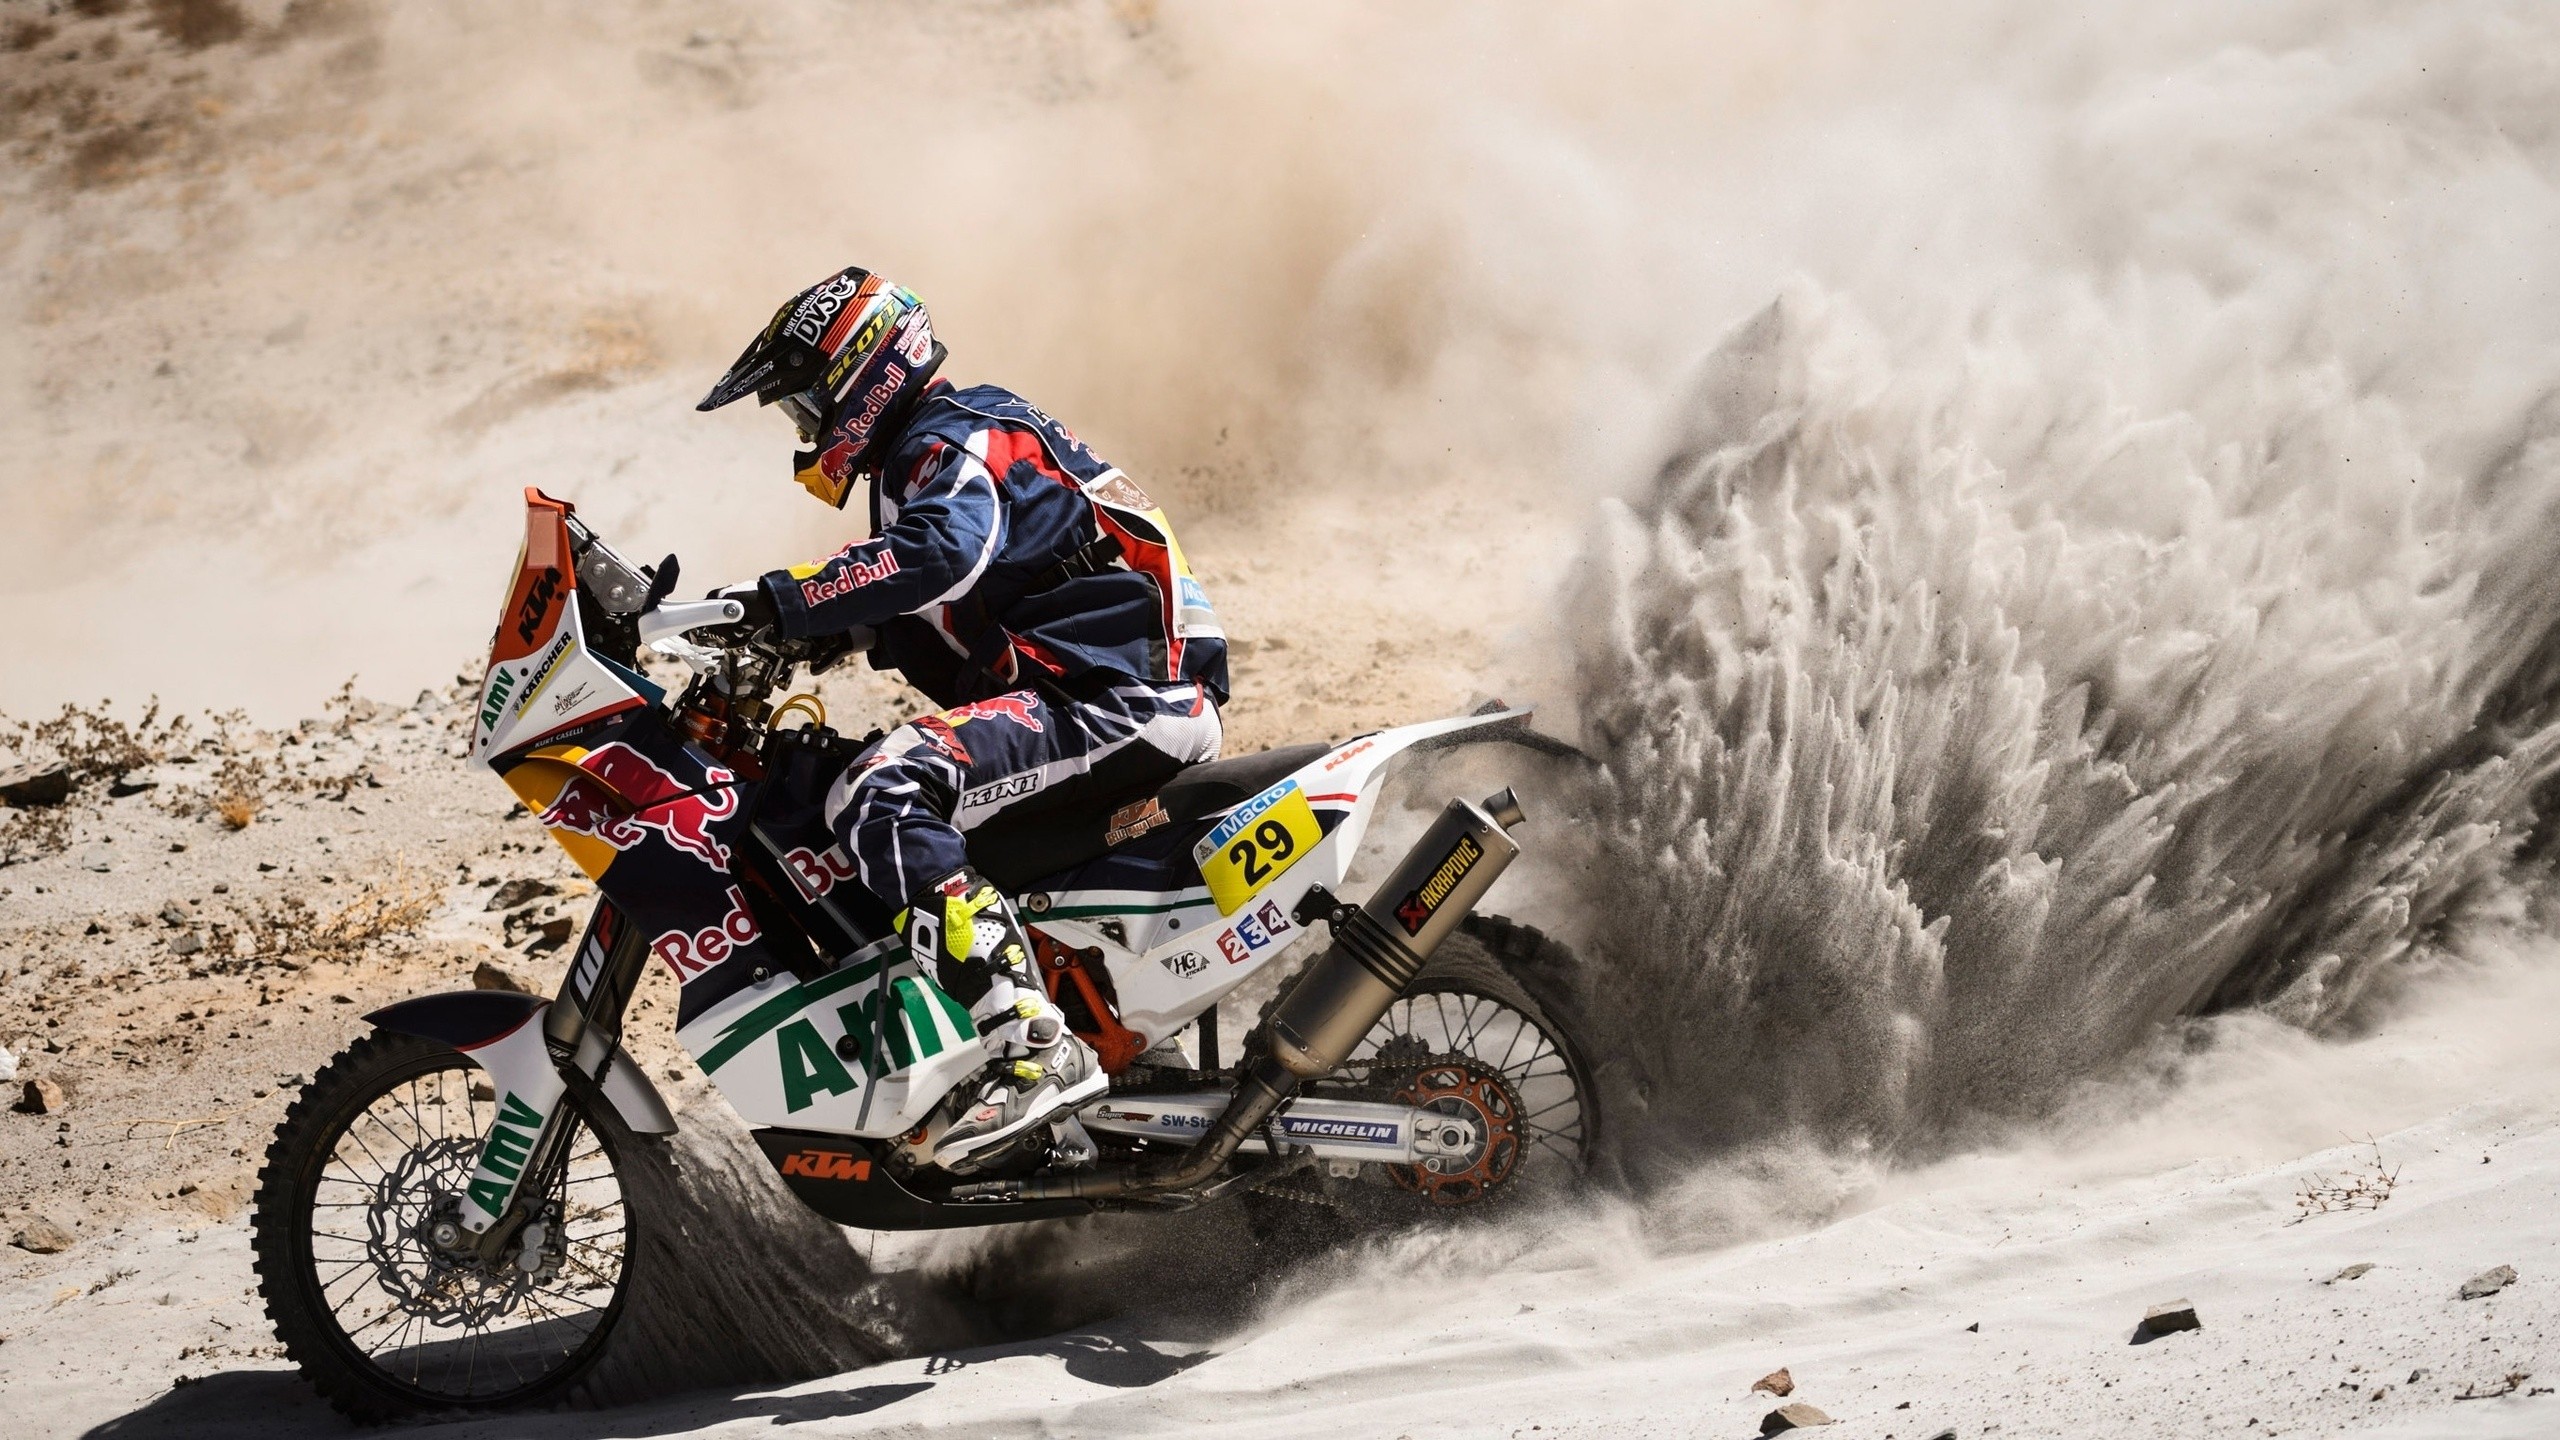 General 2560x1440 motorcycle KTM Red Bull Dakar dirt bikes dirt sand vehicle sport British motorcycles